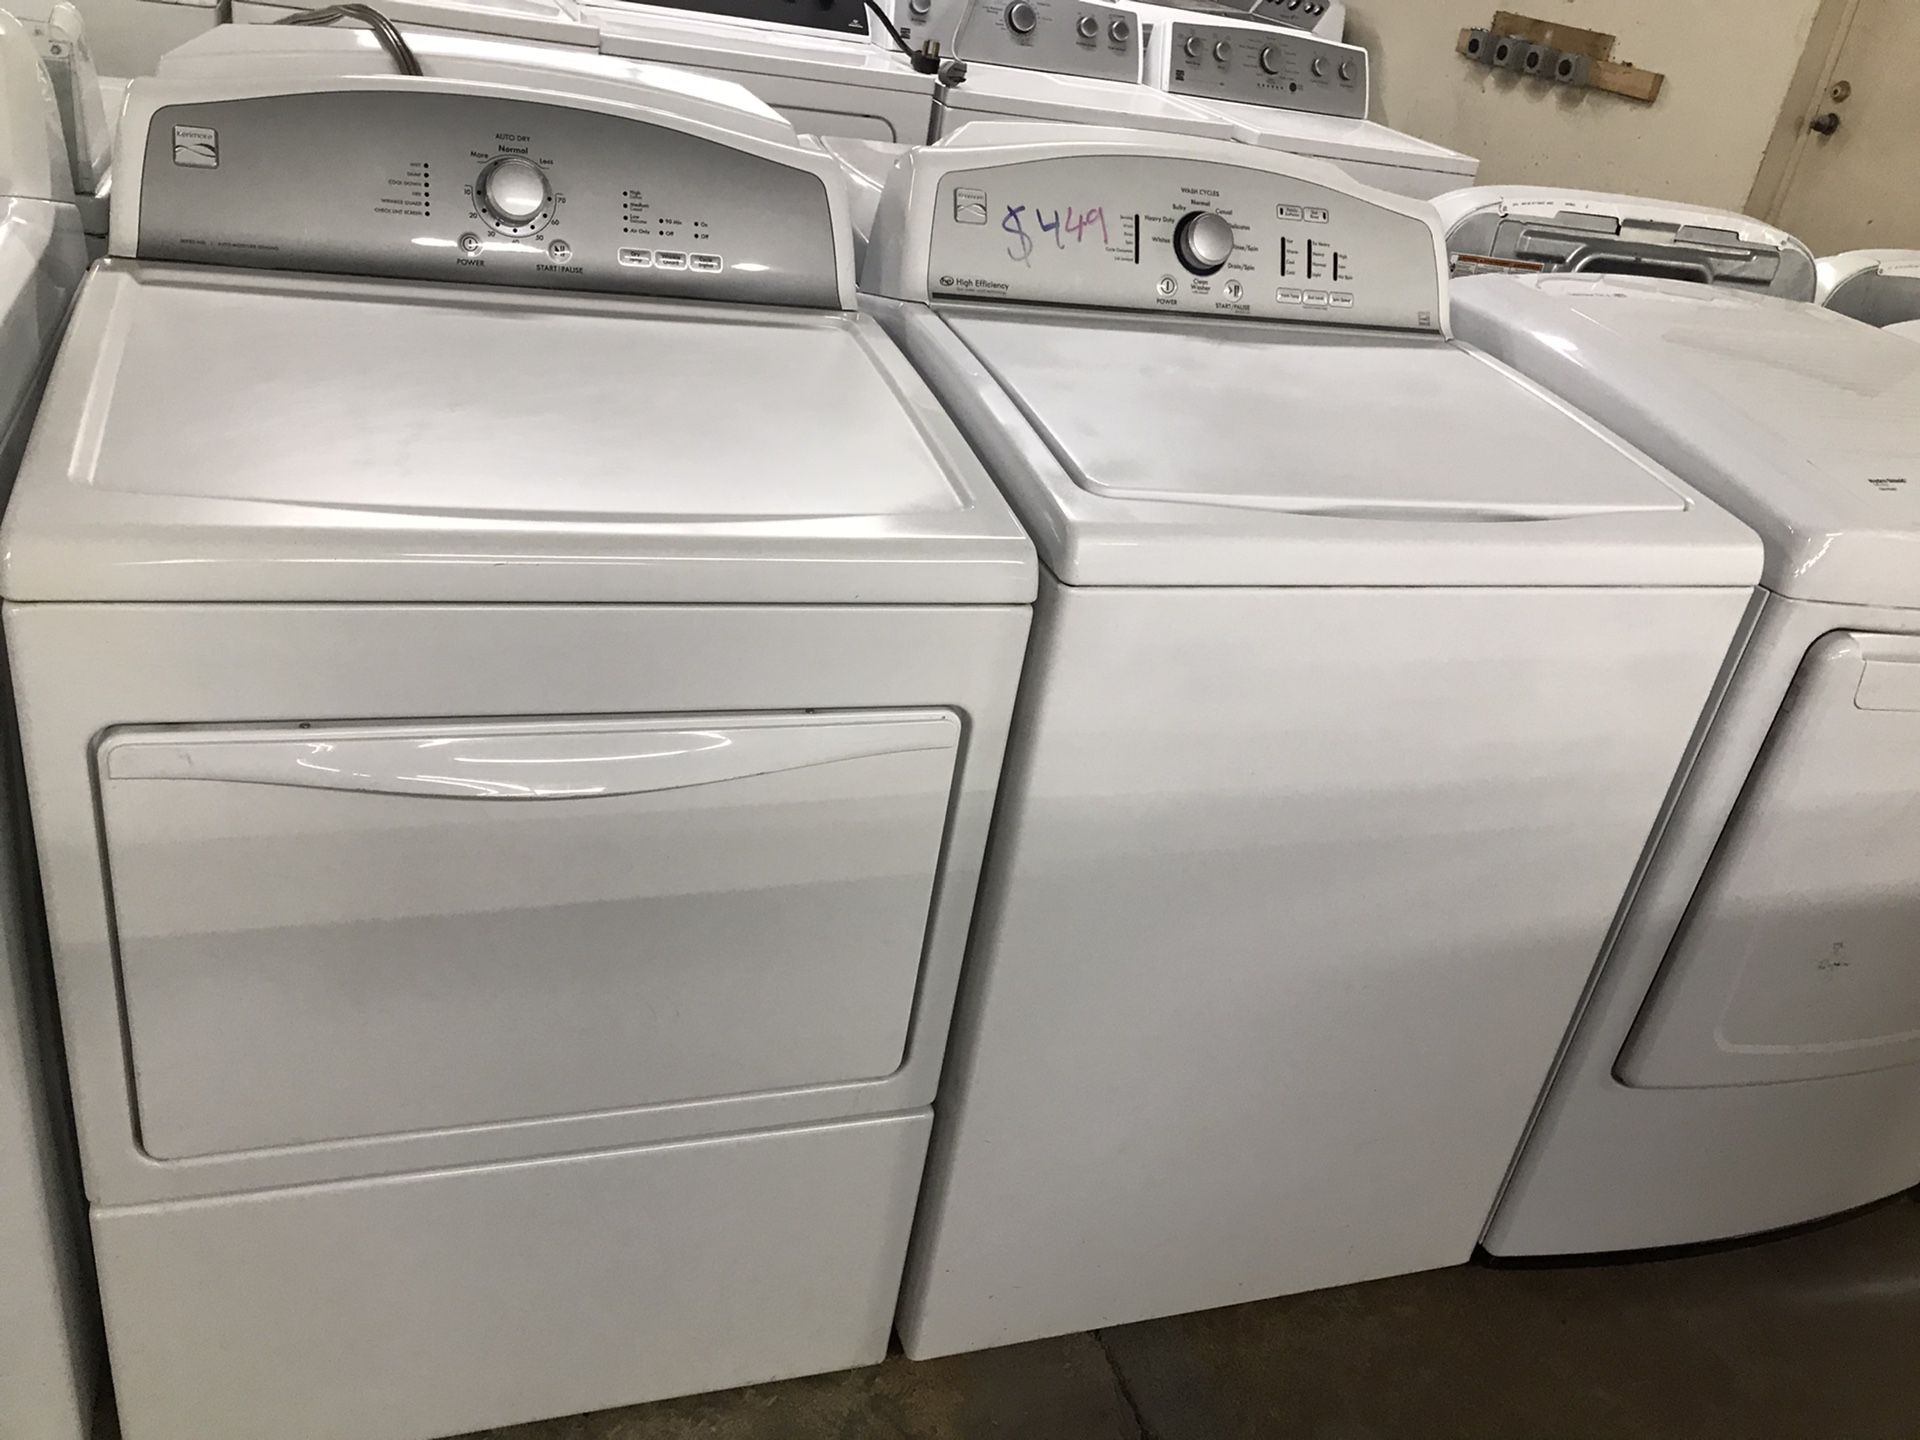 Kenmore washer & dryer set